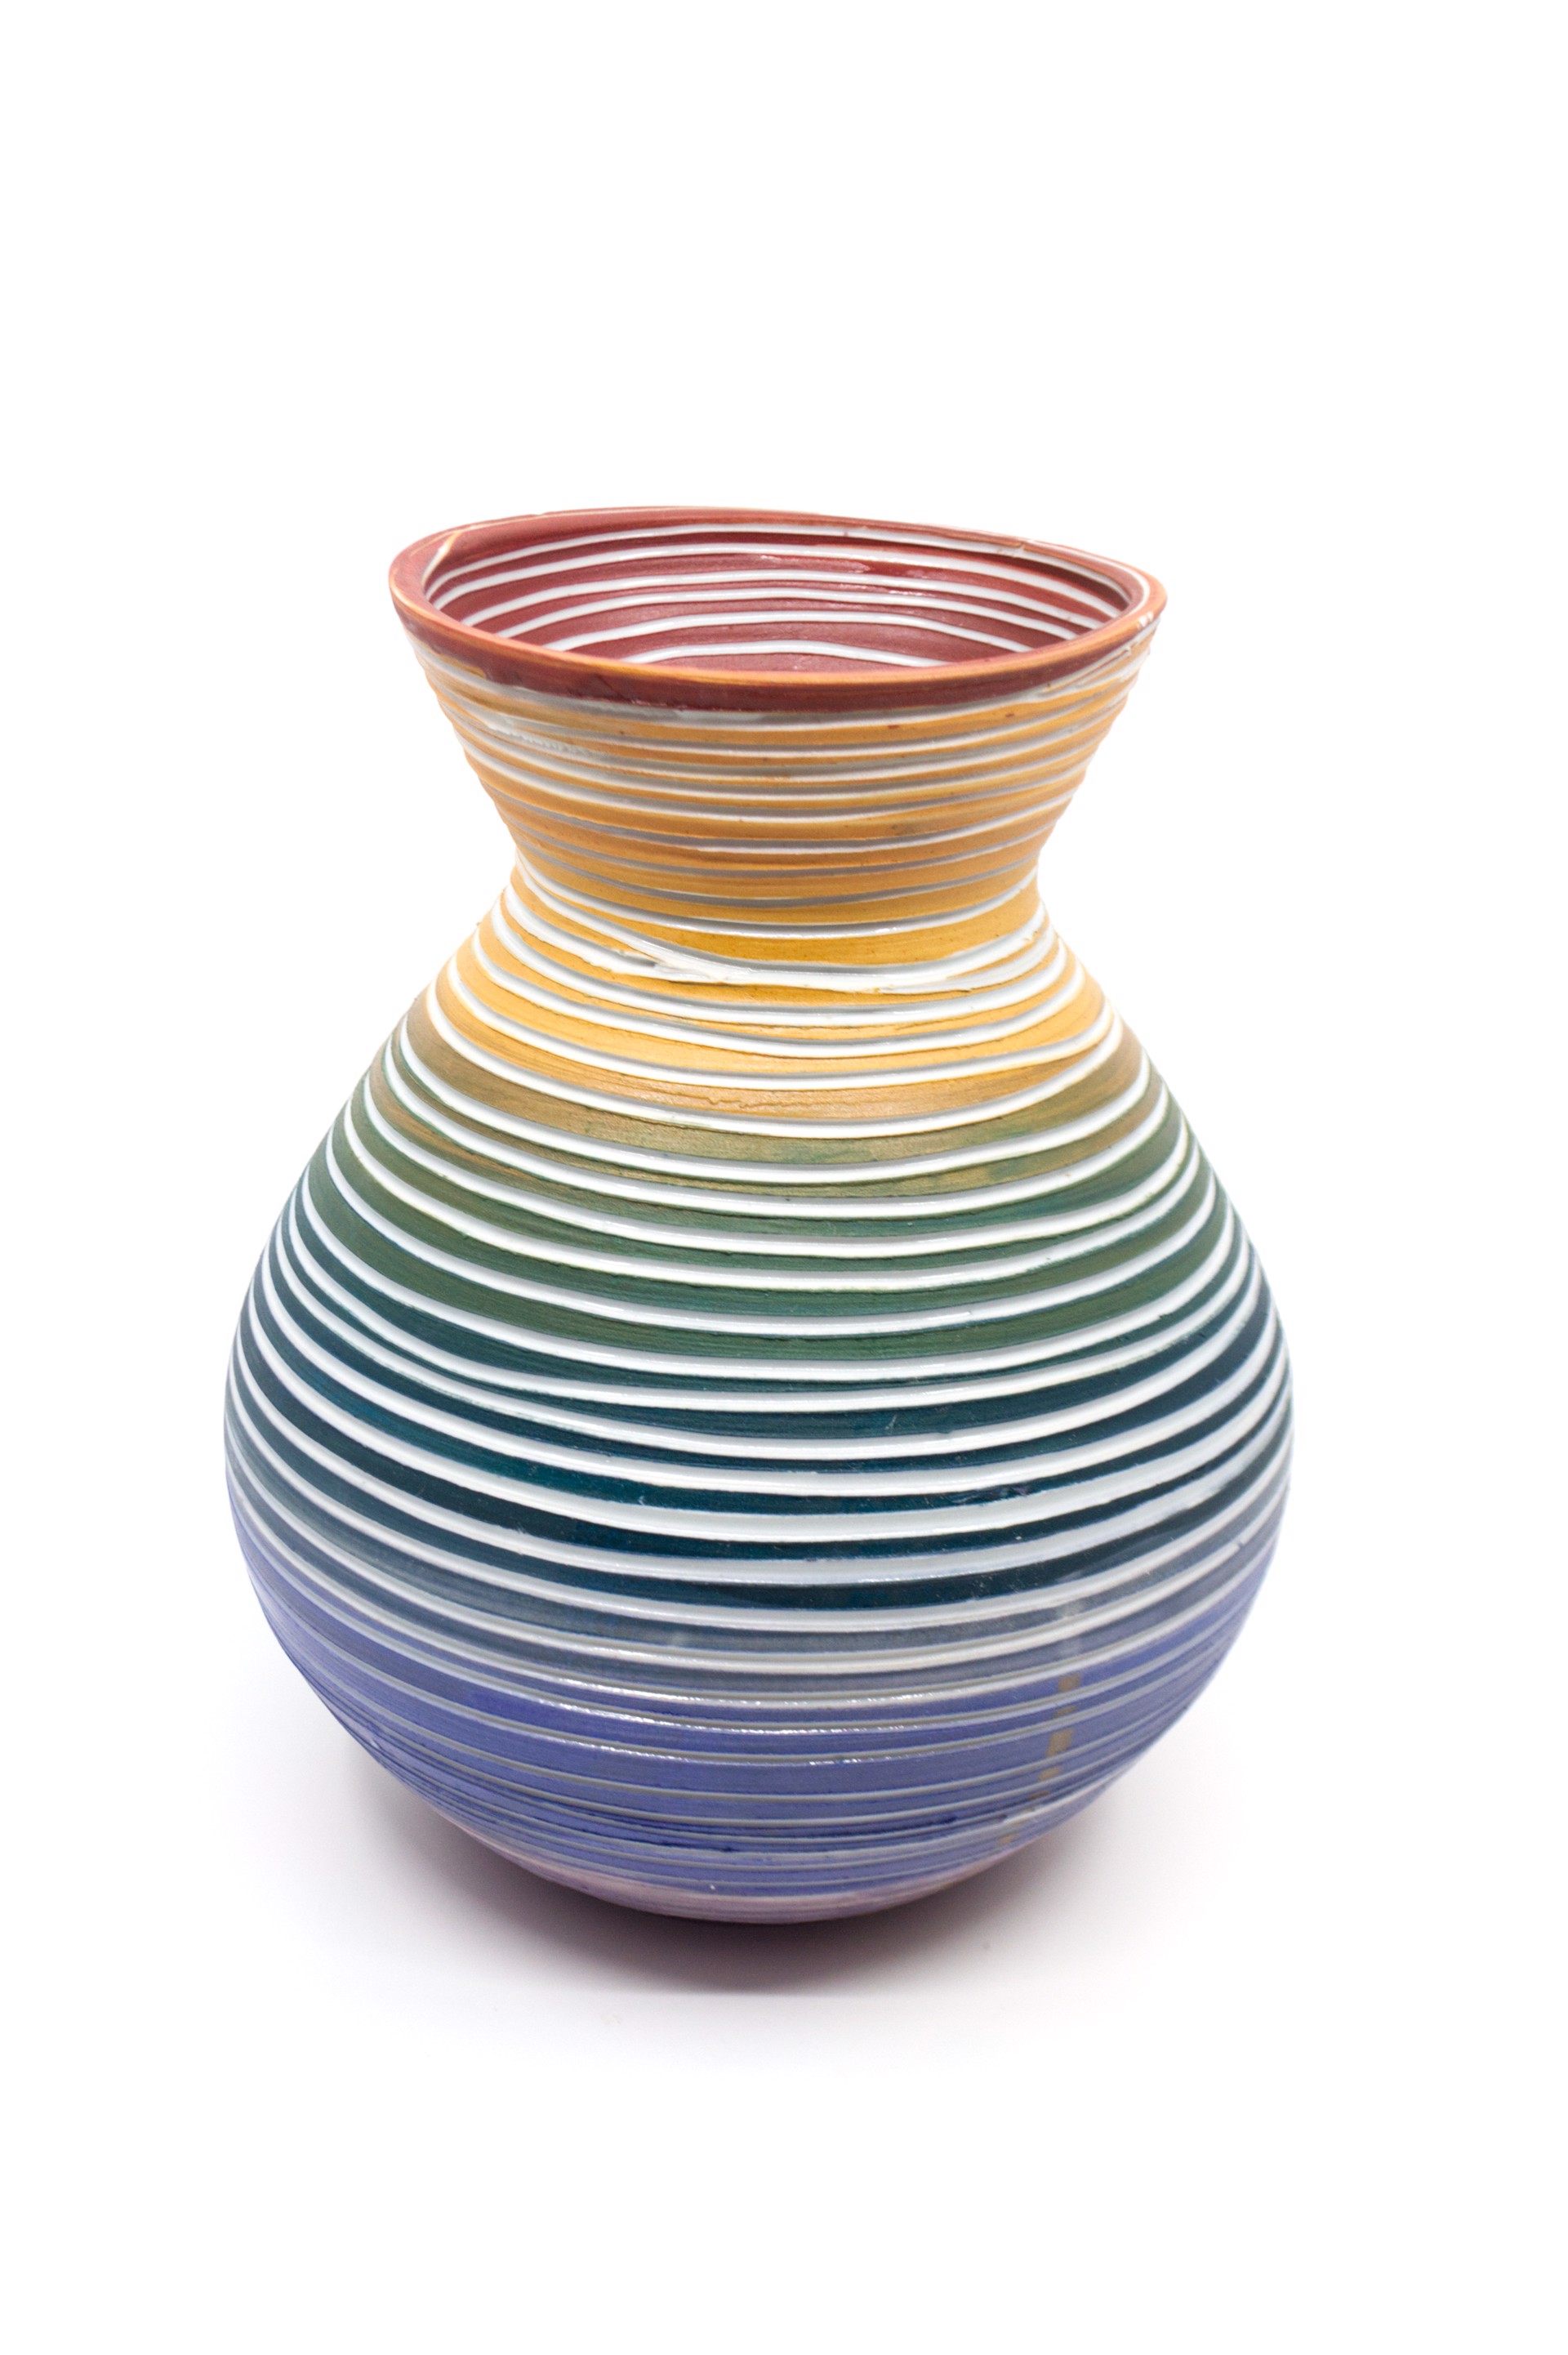 ROYGBIV Vase II by Heather Bradley